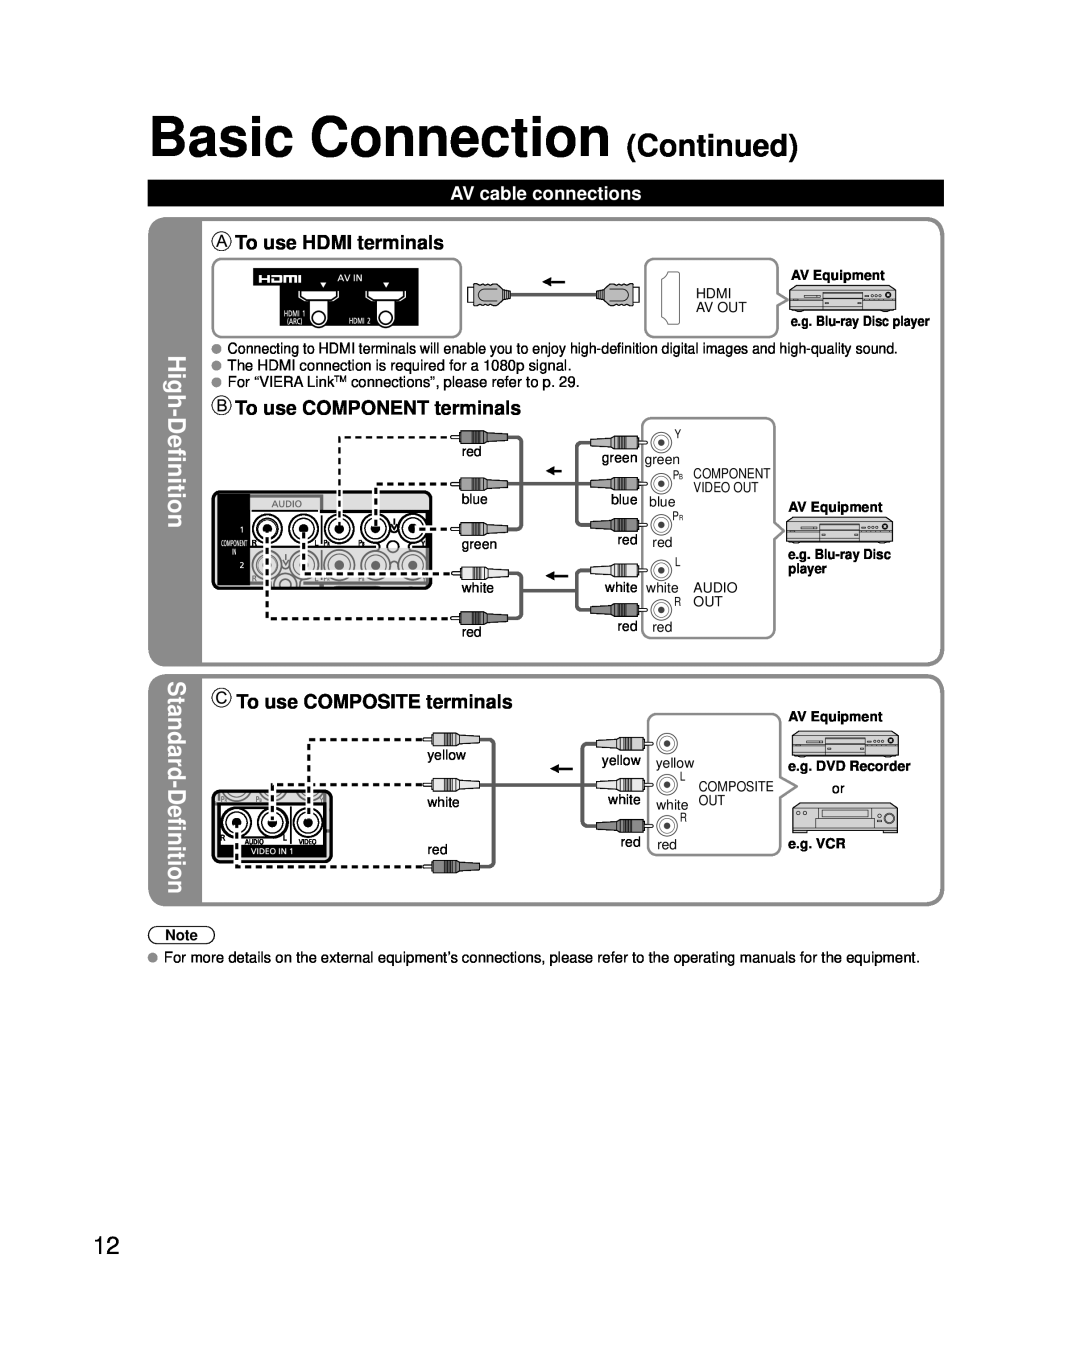 Panasonic TC-P42U2, TC-P50U2 Basic Connection Continued, High-Definition, Standard-Definition, To use HDMI terminals 